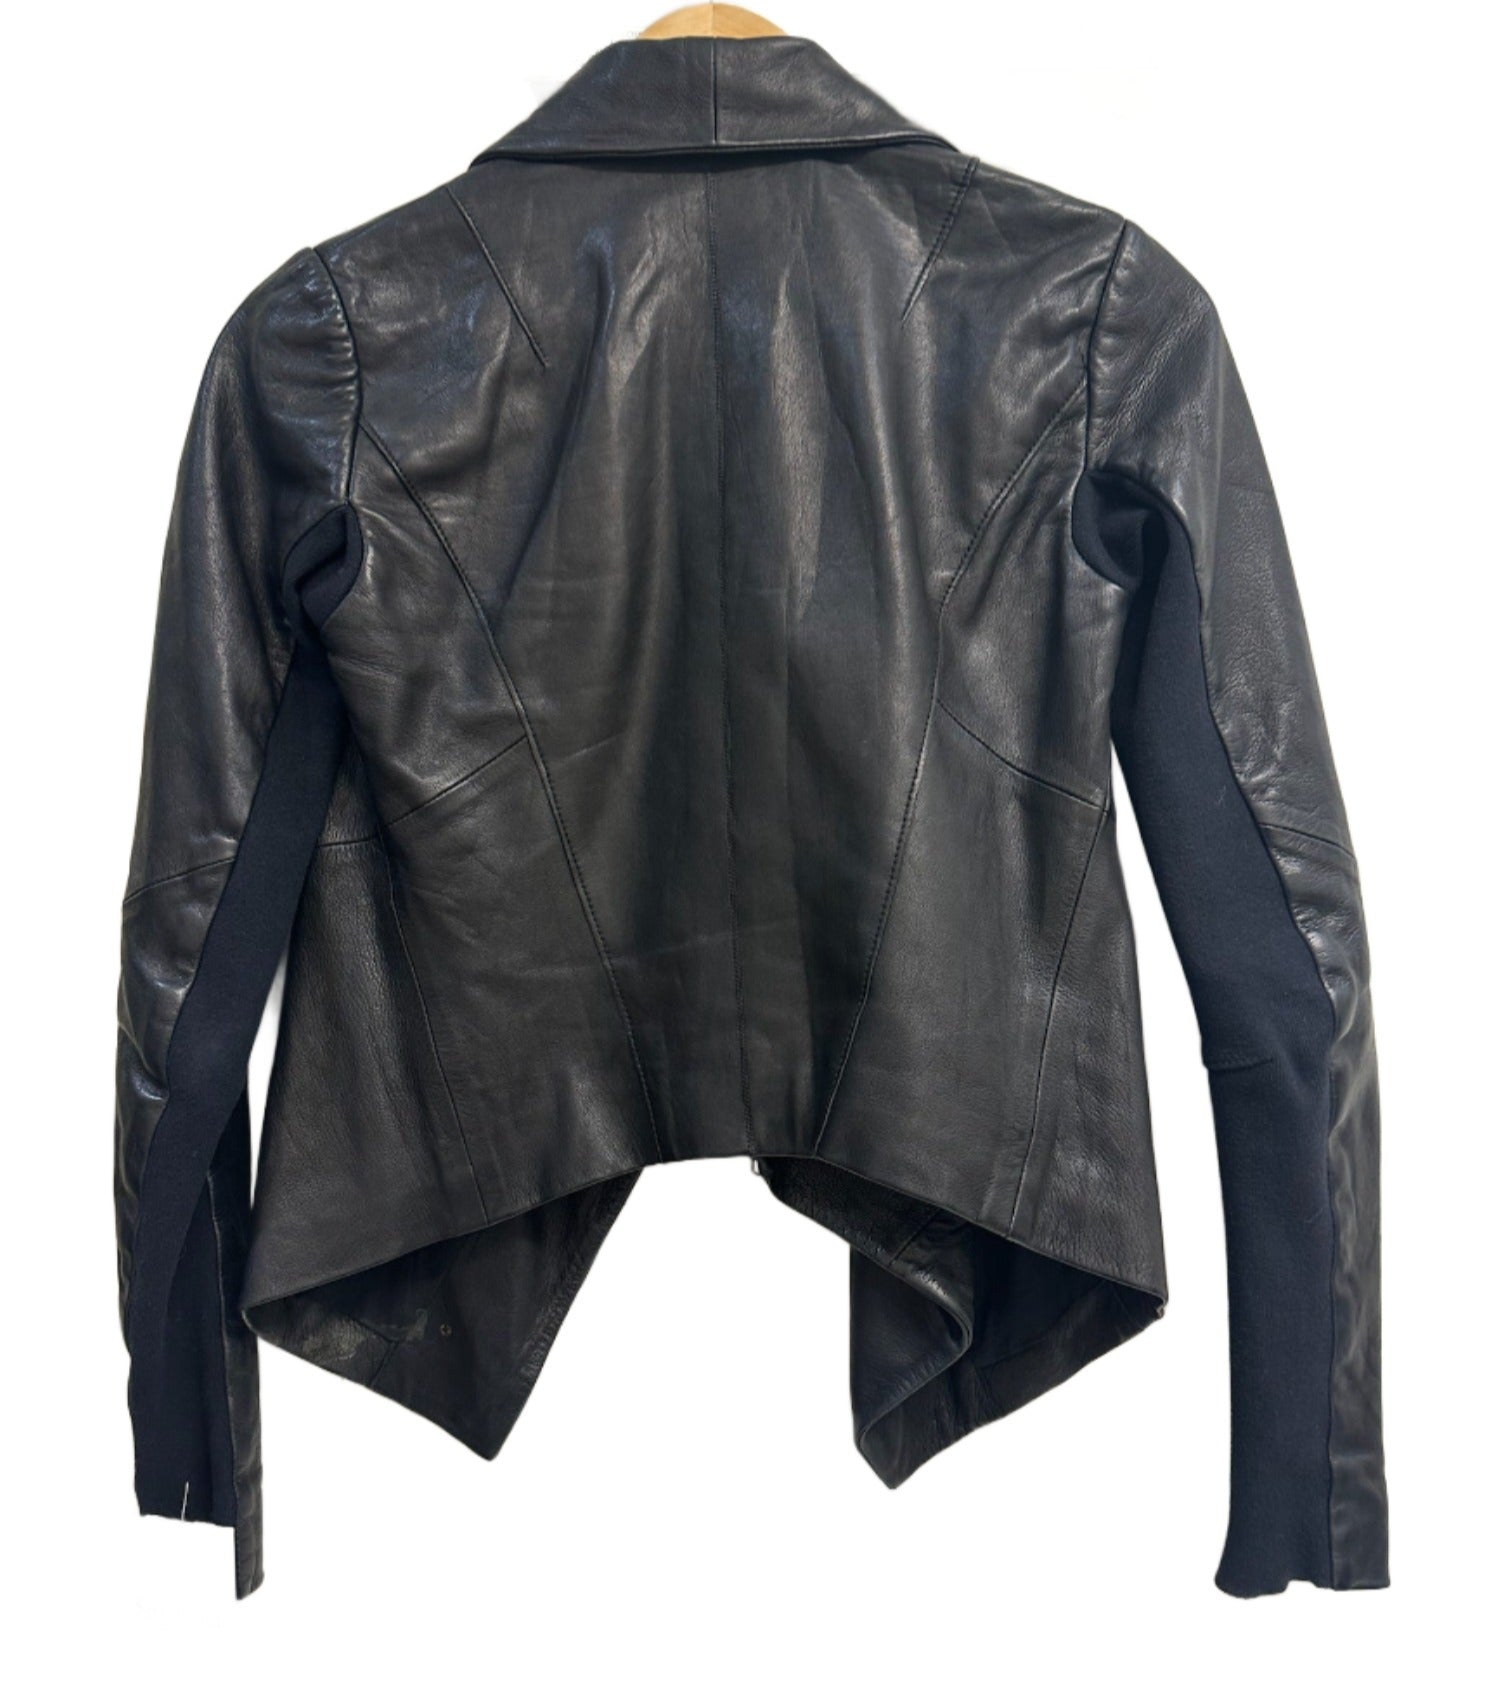 Husk Black Leather Jacket